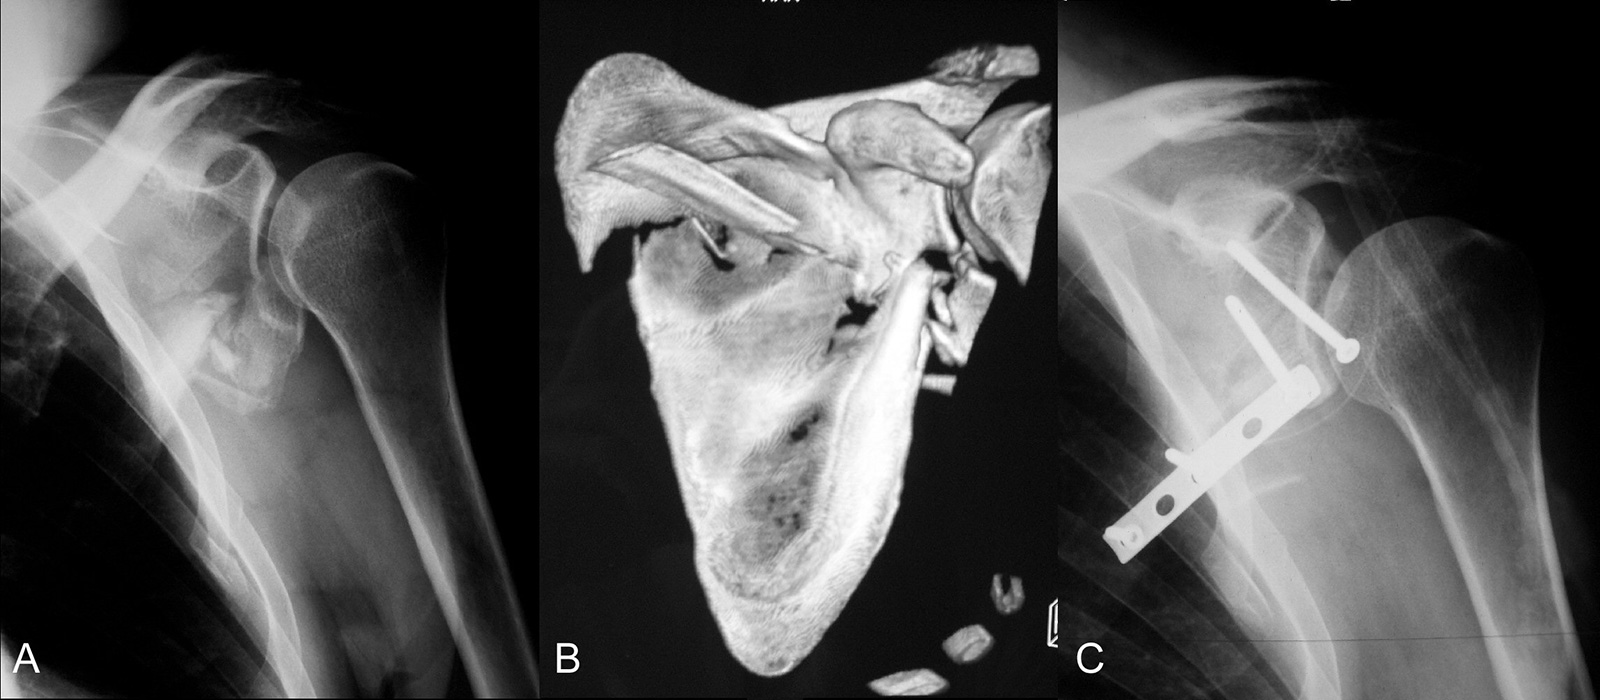 Abb. 3-64: intaartikuläre Scapulafraktur Typ 5 nach Ideberg: präoperative Röntgenbild und CT-Bildgebung (A,B) sowie postoperatives Röntgenbild (C)